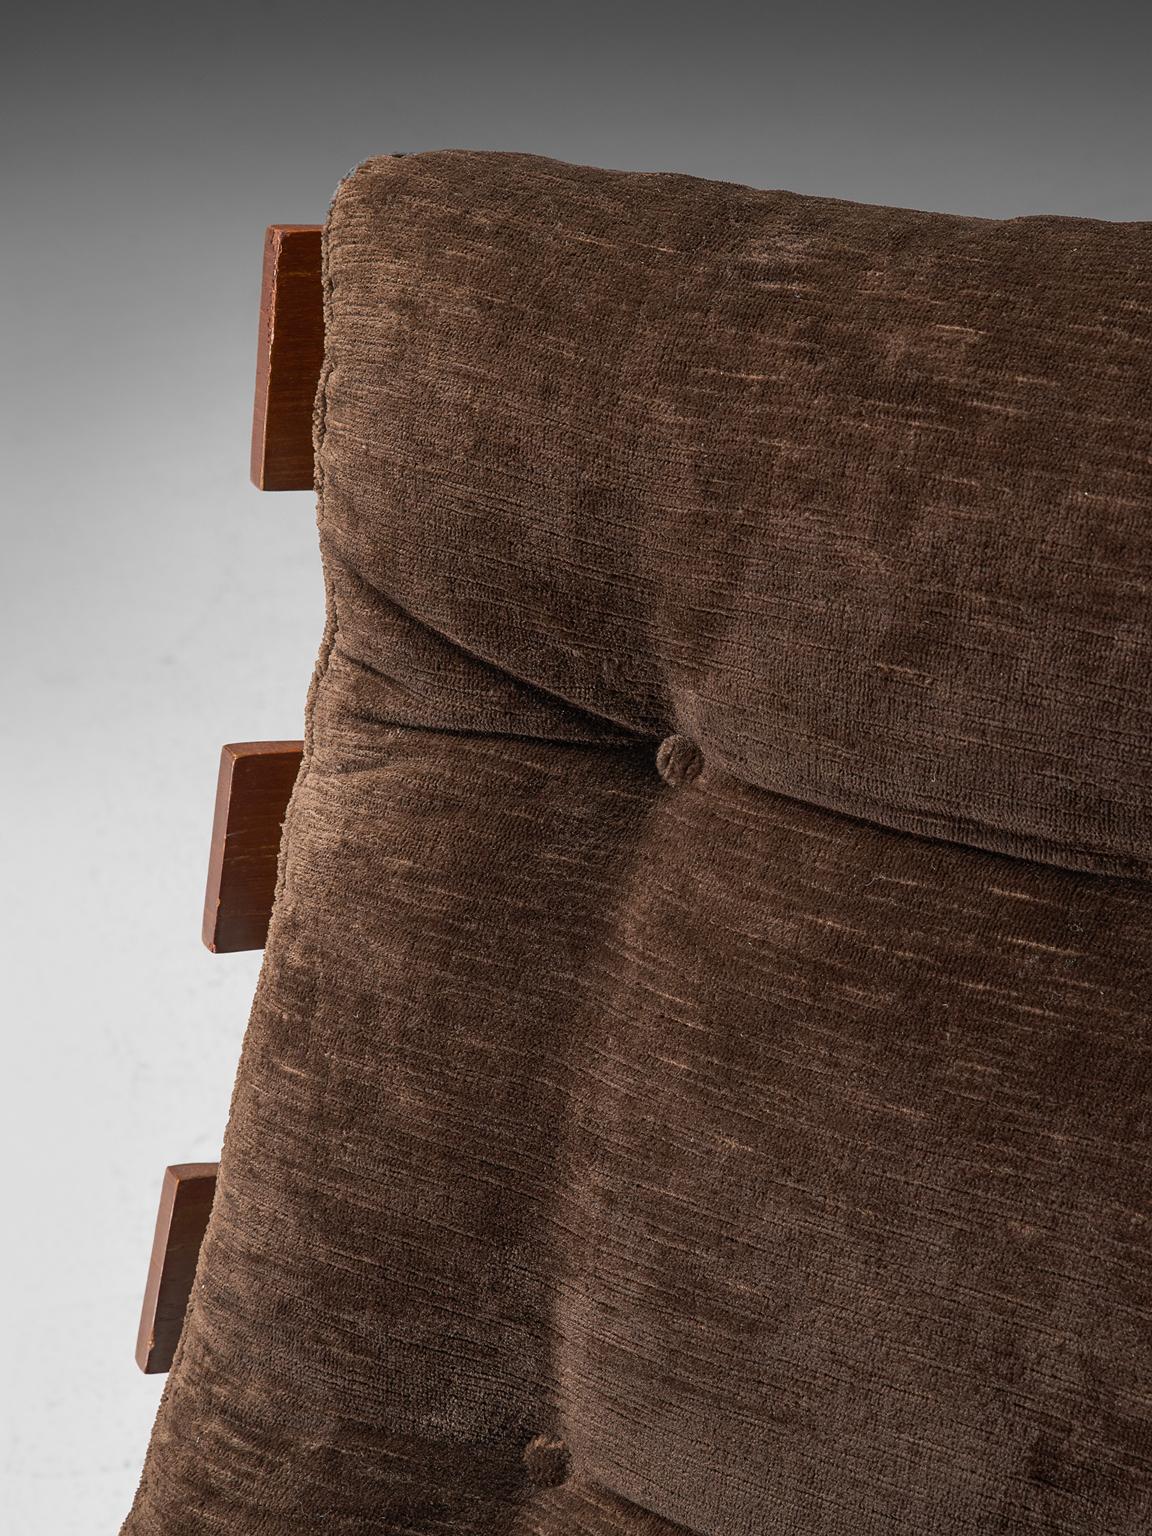 Steel Eisler and Hauner 'Costela' Chair in Teak and Brown Upholstery